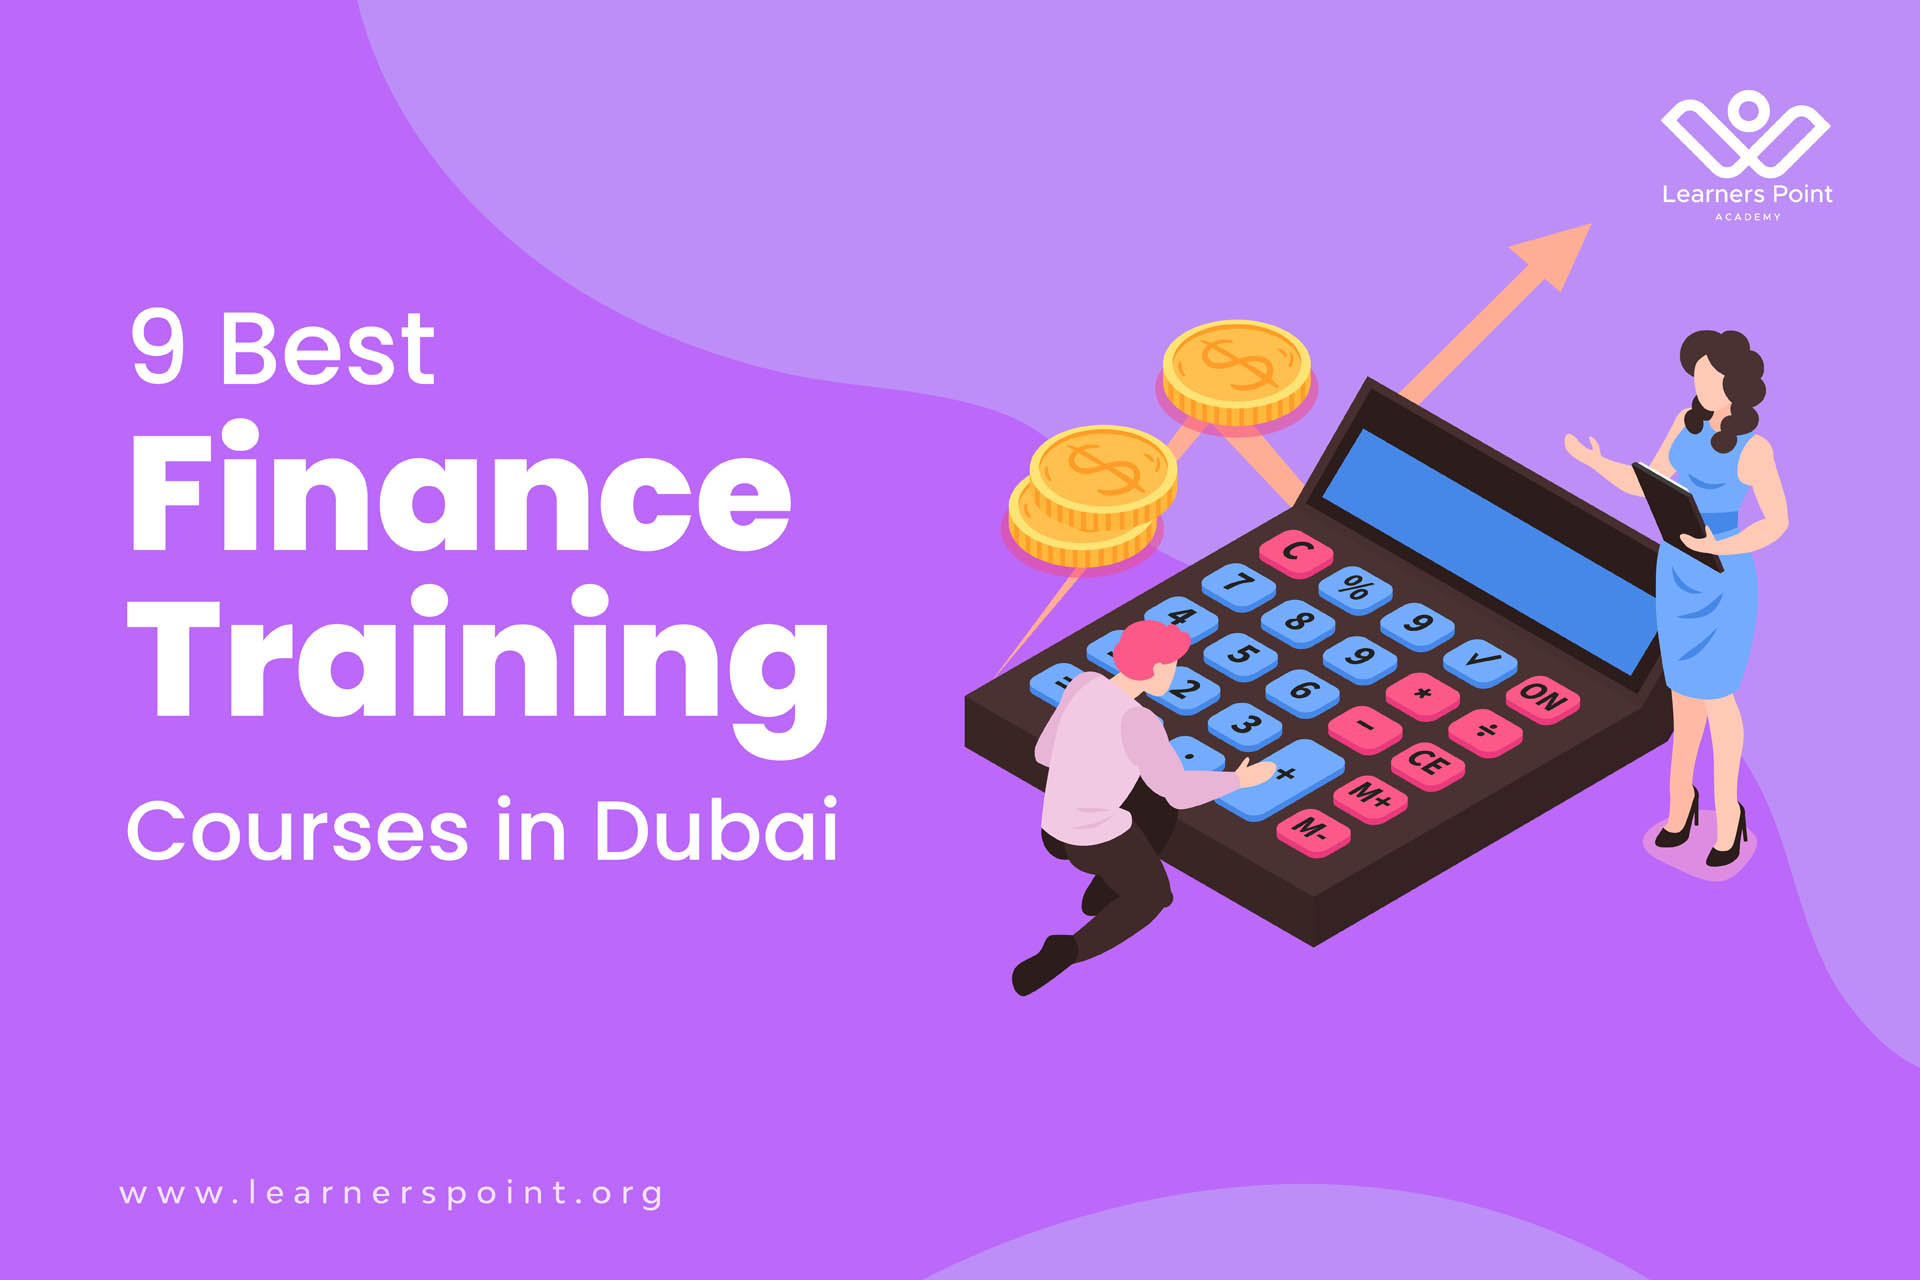 9 Best Finance Training Courses in Dubai